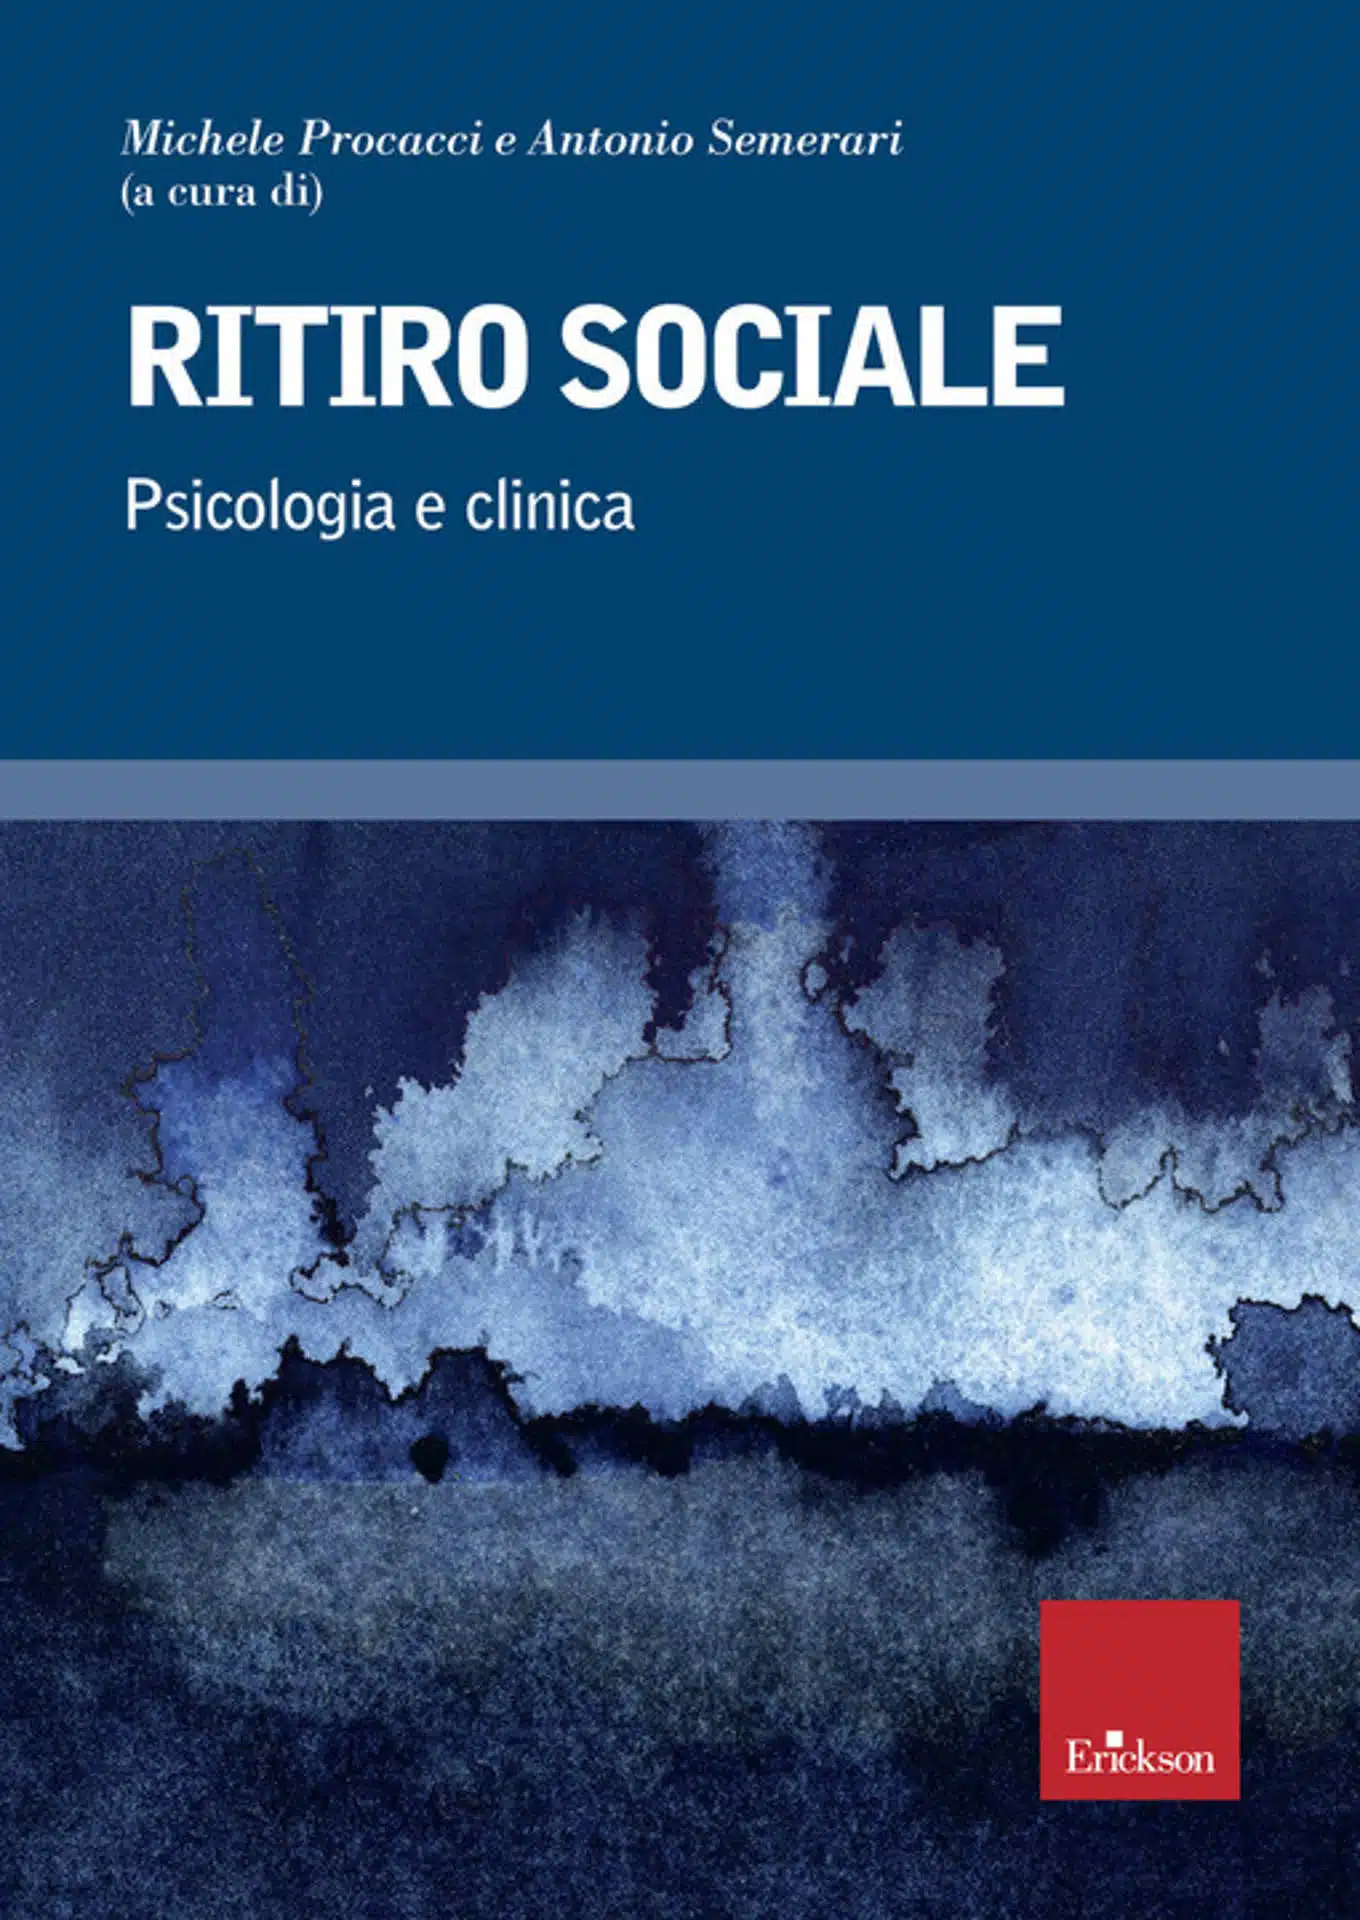 Ritiro sociale 2019 a cura di M Procacci e A Semerari Recensione Featured